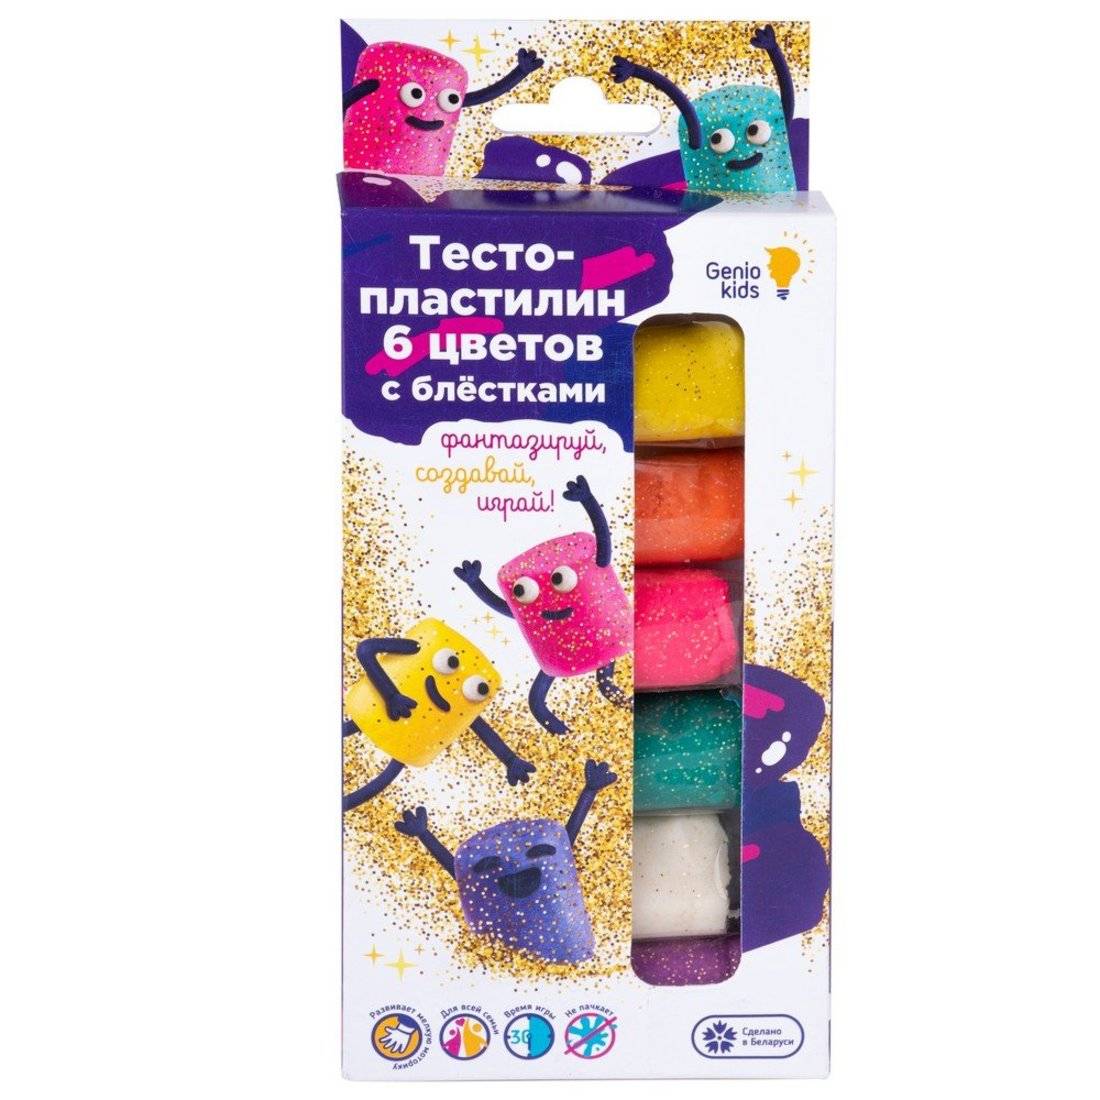 Набор для детской лепки "Тесто-пластилин 6 цветов с блёстками" Genio Kids TA1091